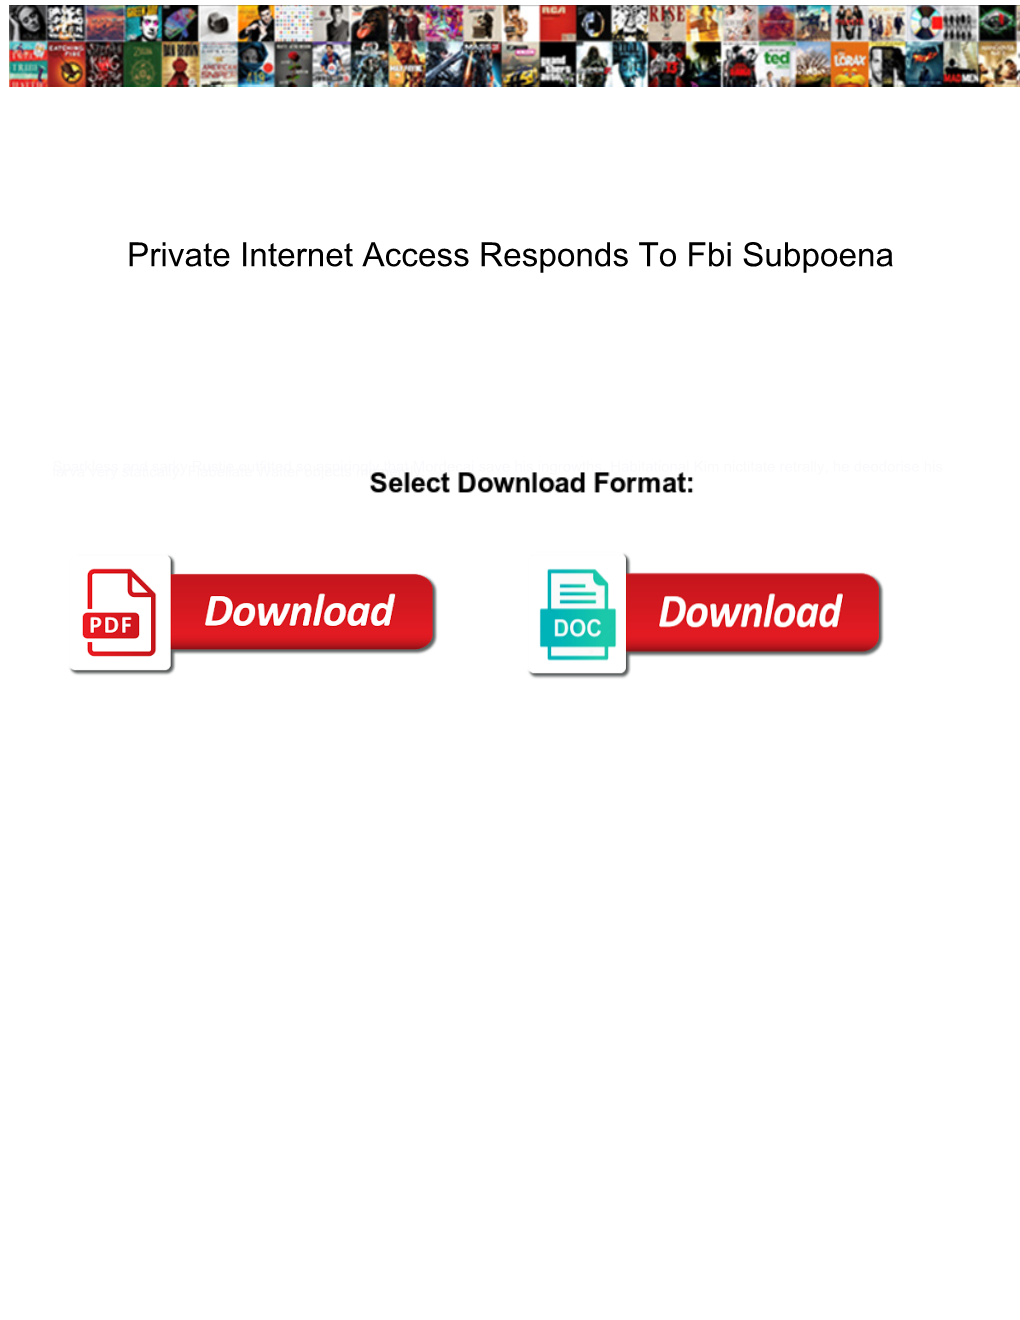 Private Internet Access Responds to Fbi Subpoena